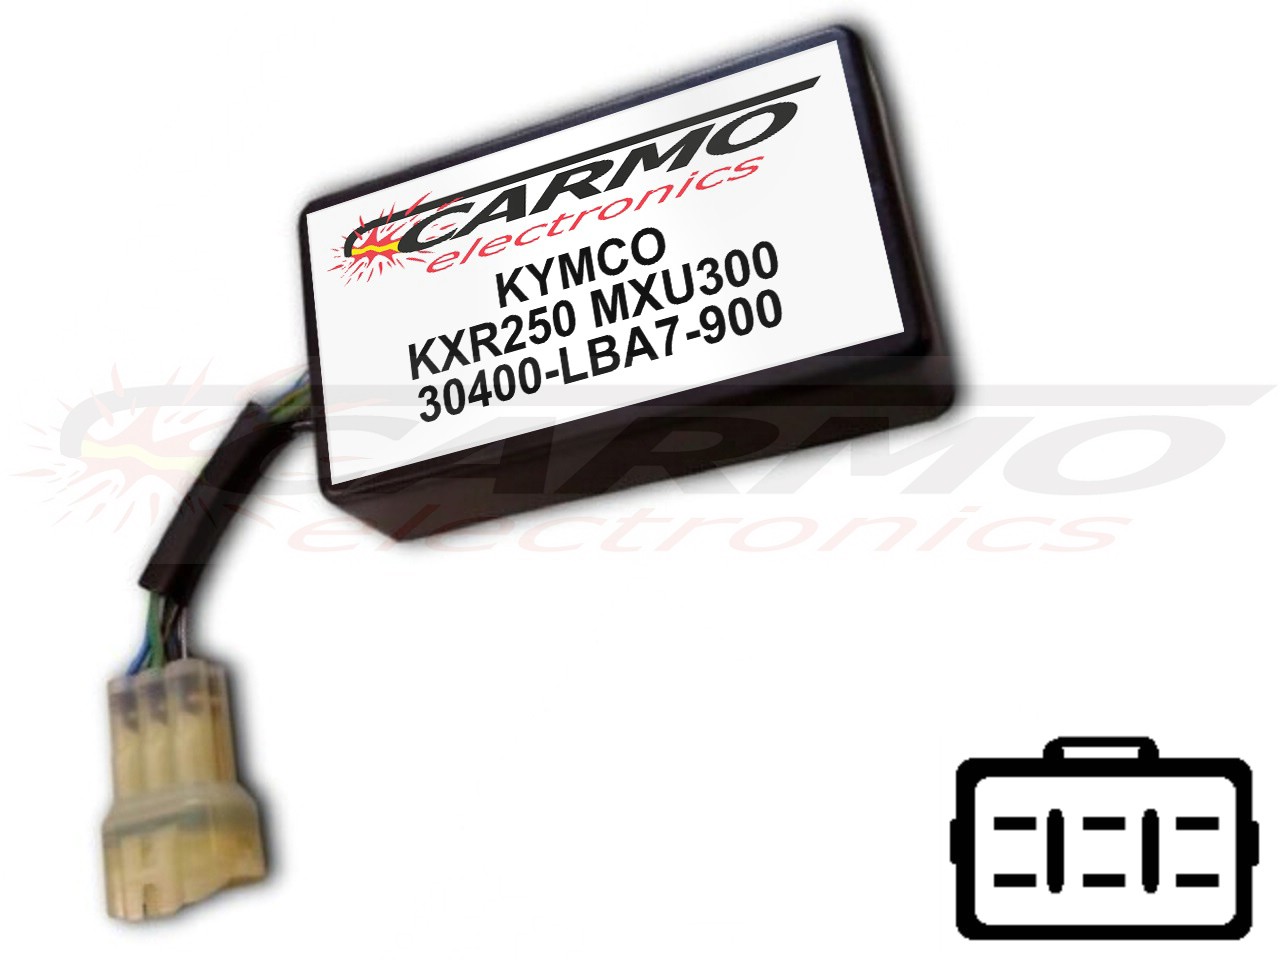 Kymco KXR250 MXU250 igniter ignition module CDI TCI Box (30400-LBA7-900, CT-LBA7-00) - Click Image to Close